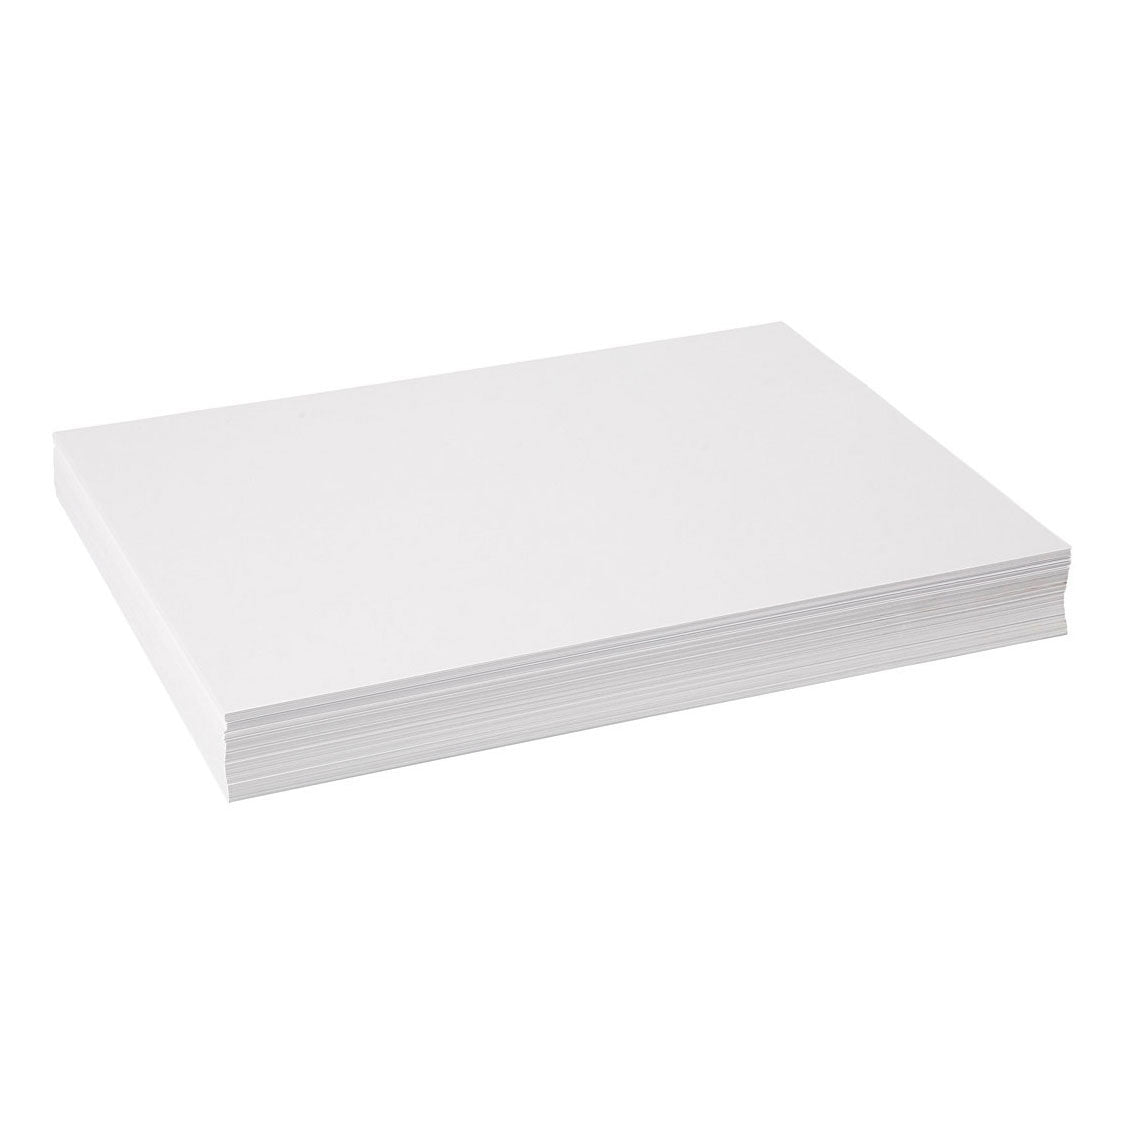 Creativ Company Papel de dibujo blanco A3 190 g/m², 250 hojas